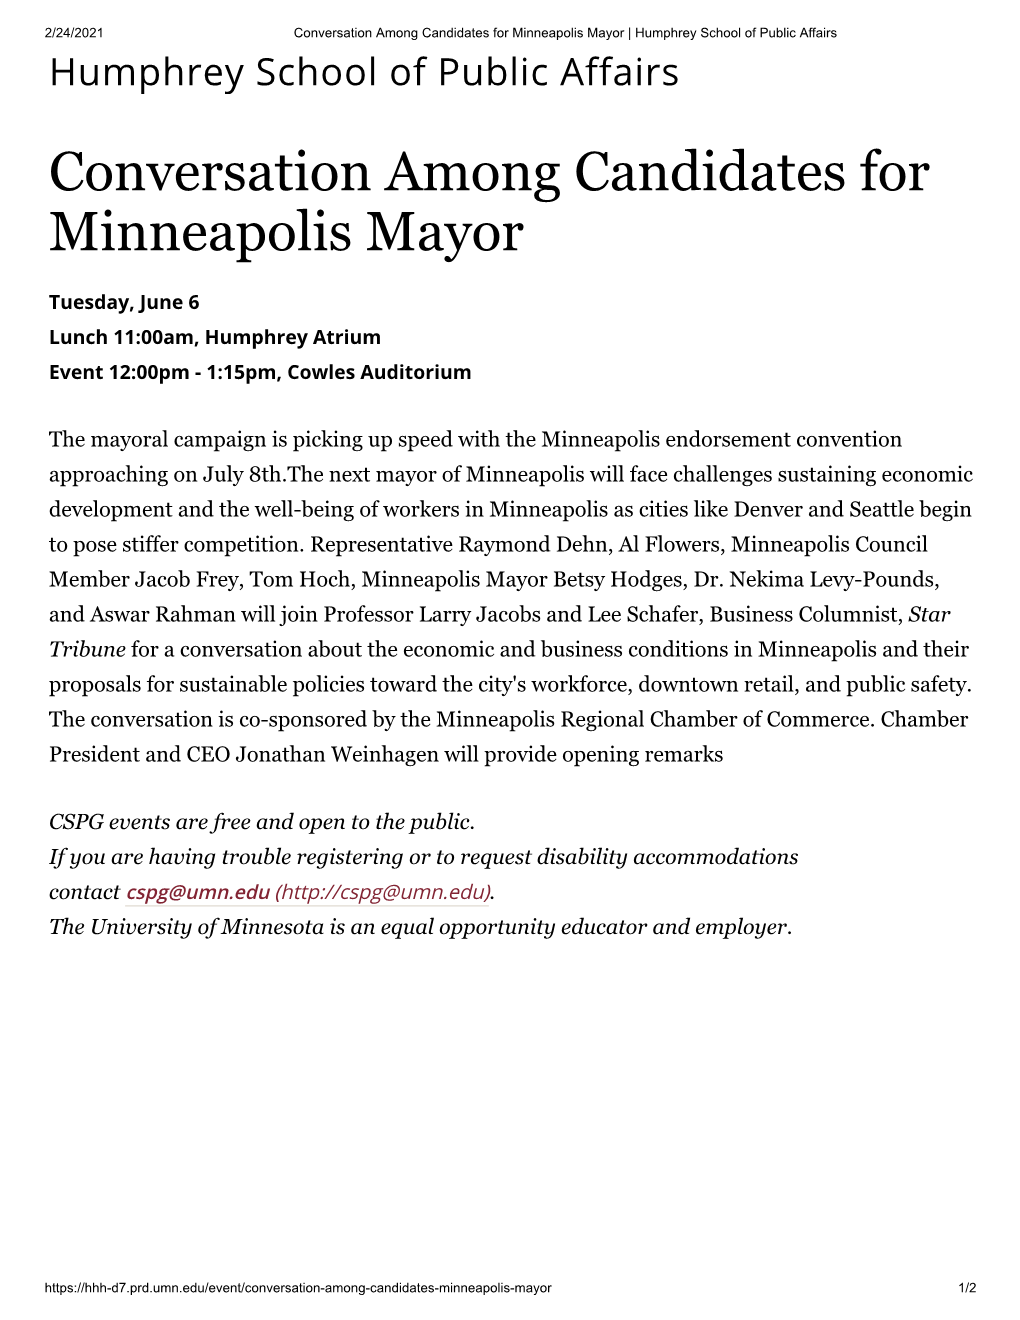 Conversation Among Candidates for Minneapolis Mayor